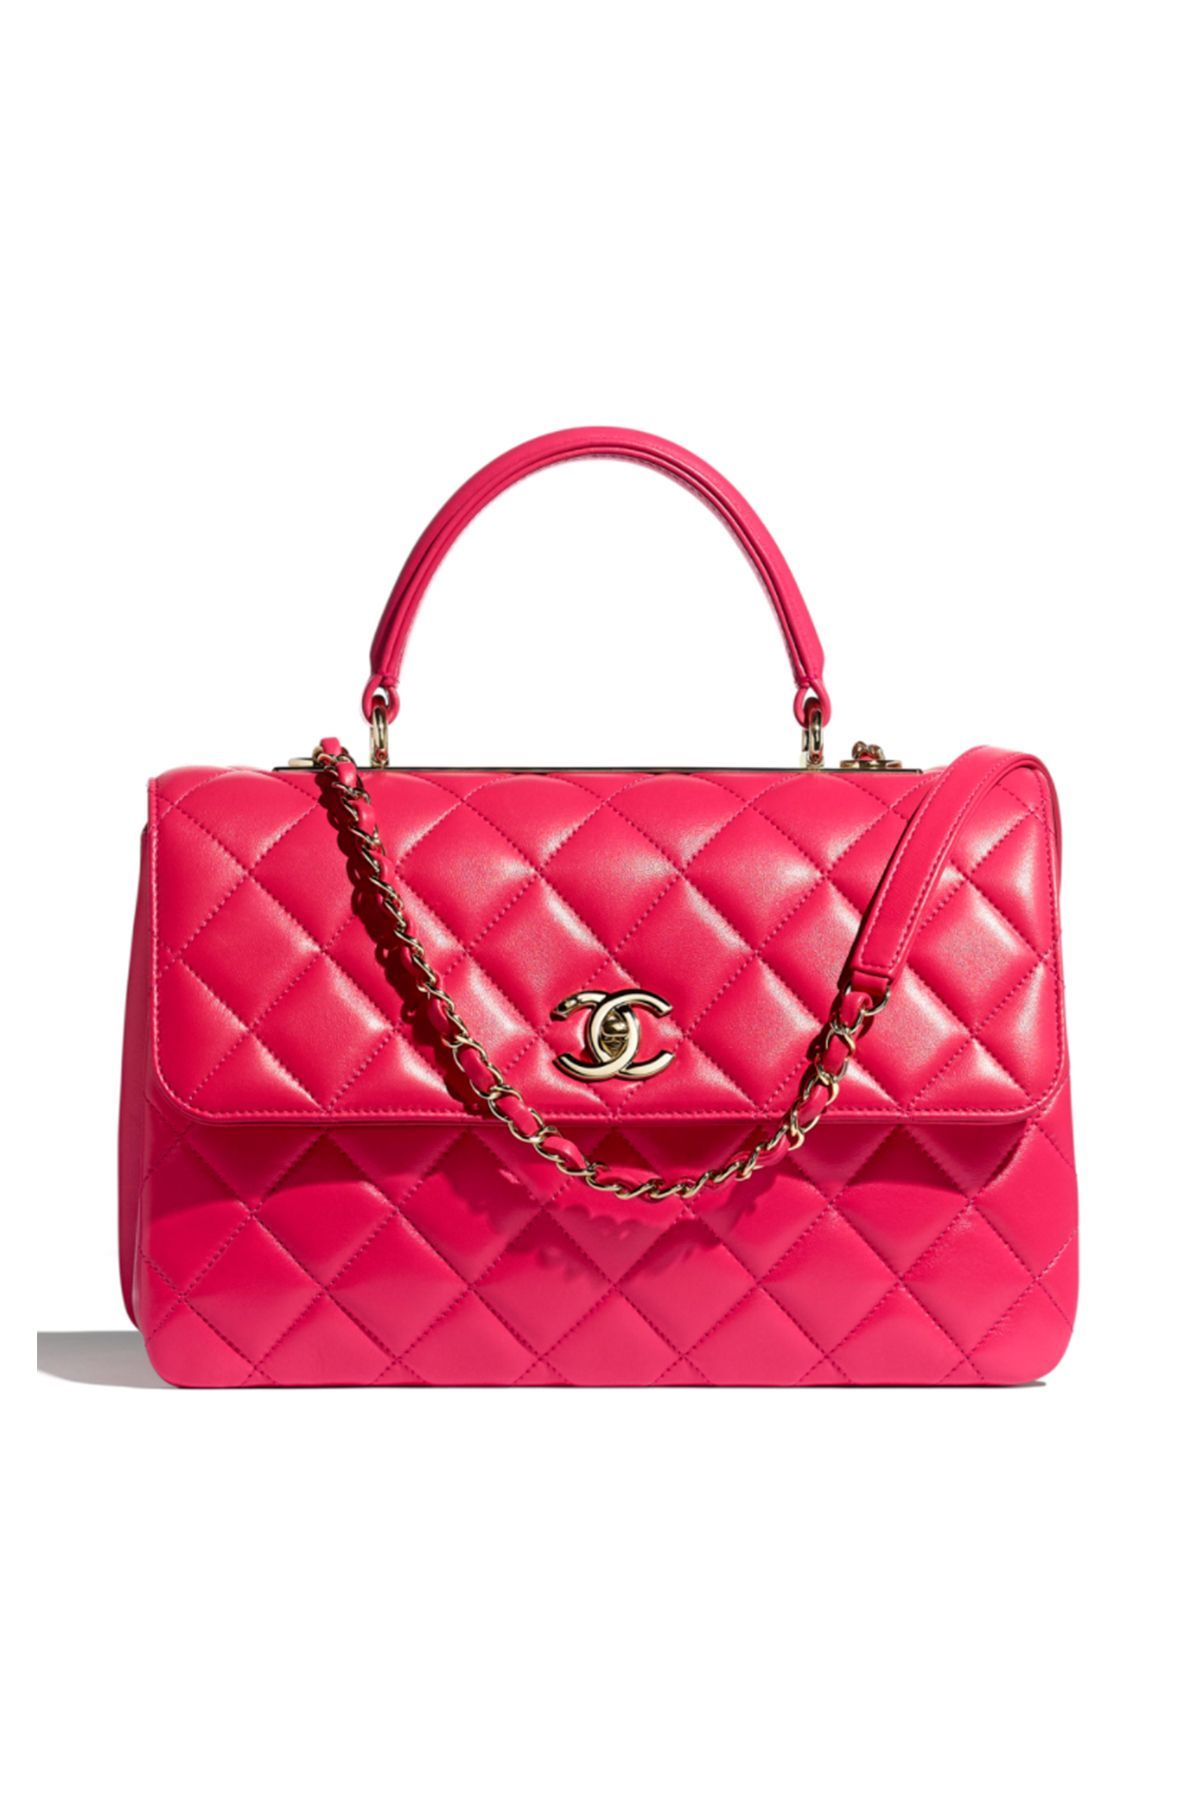 Classy Handbags To Add Best To Your Personality | StyleGods